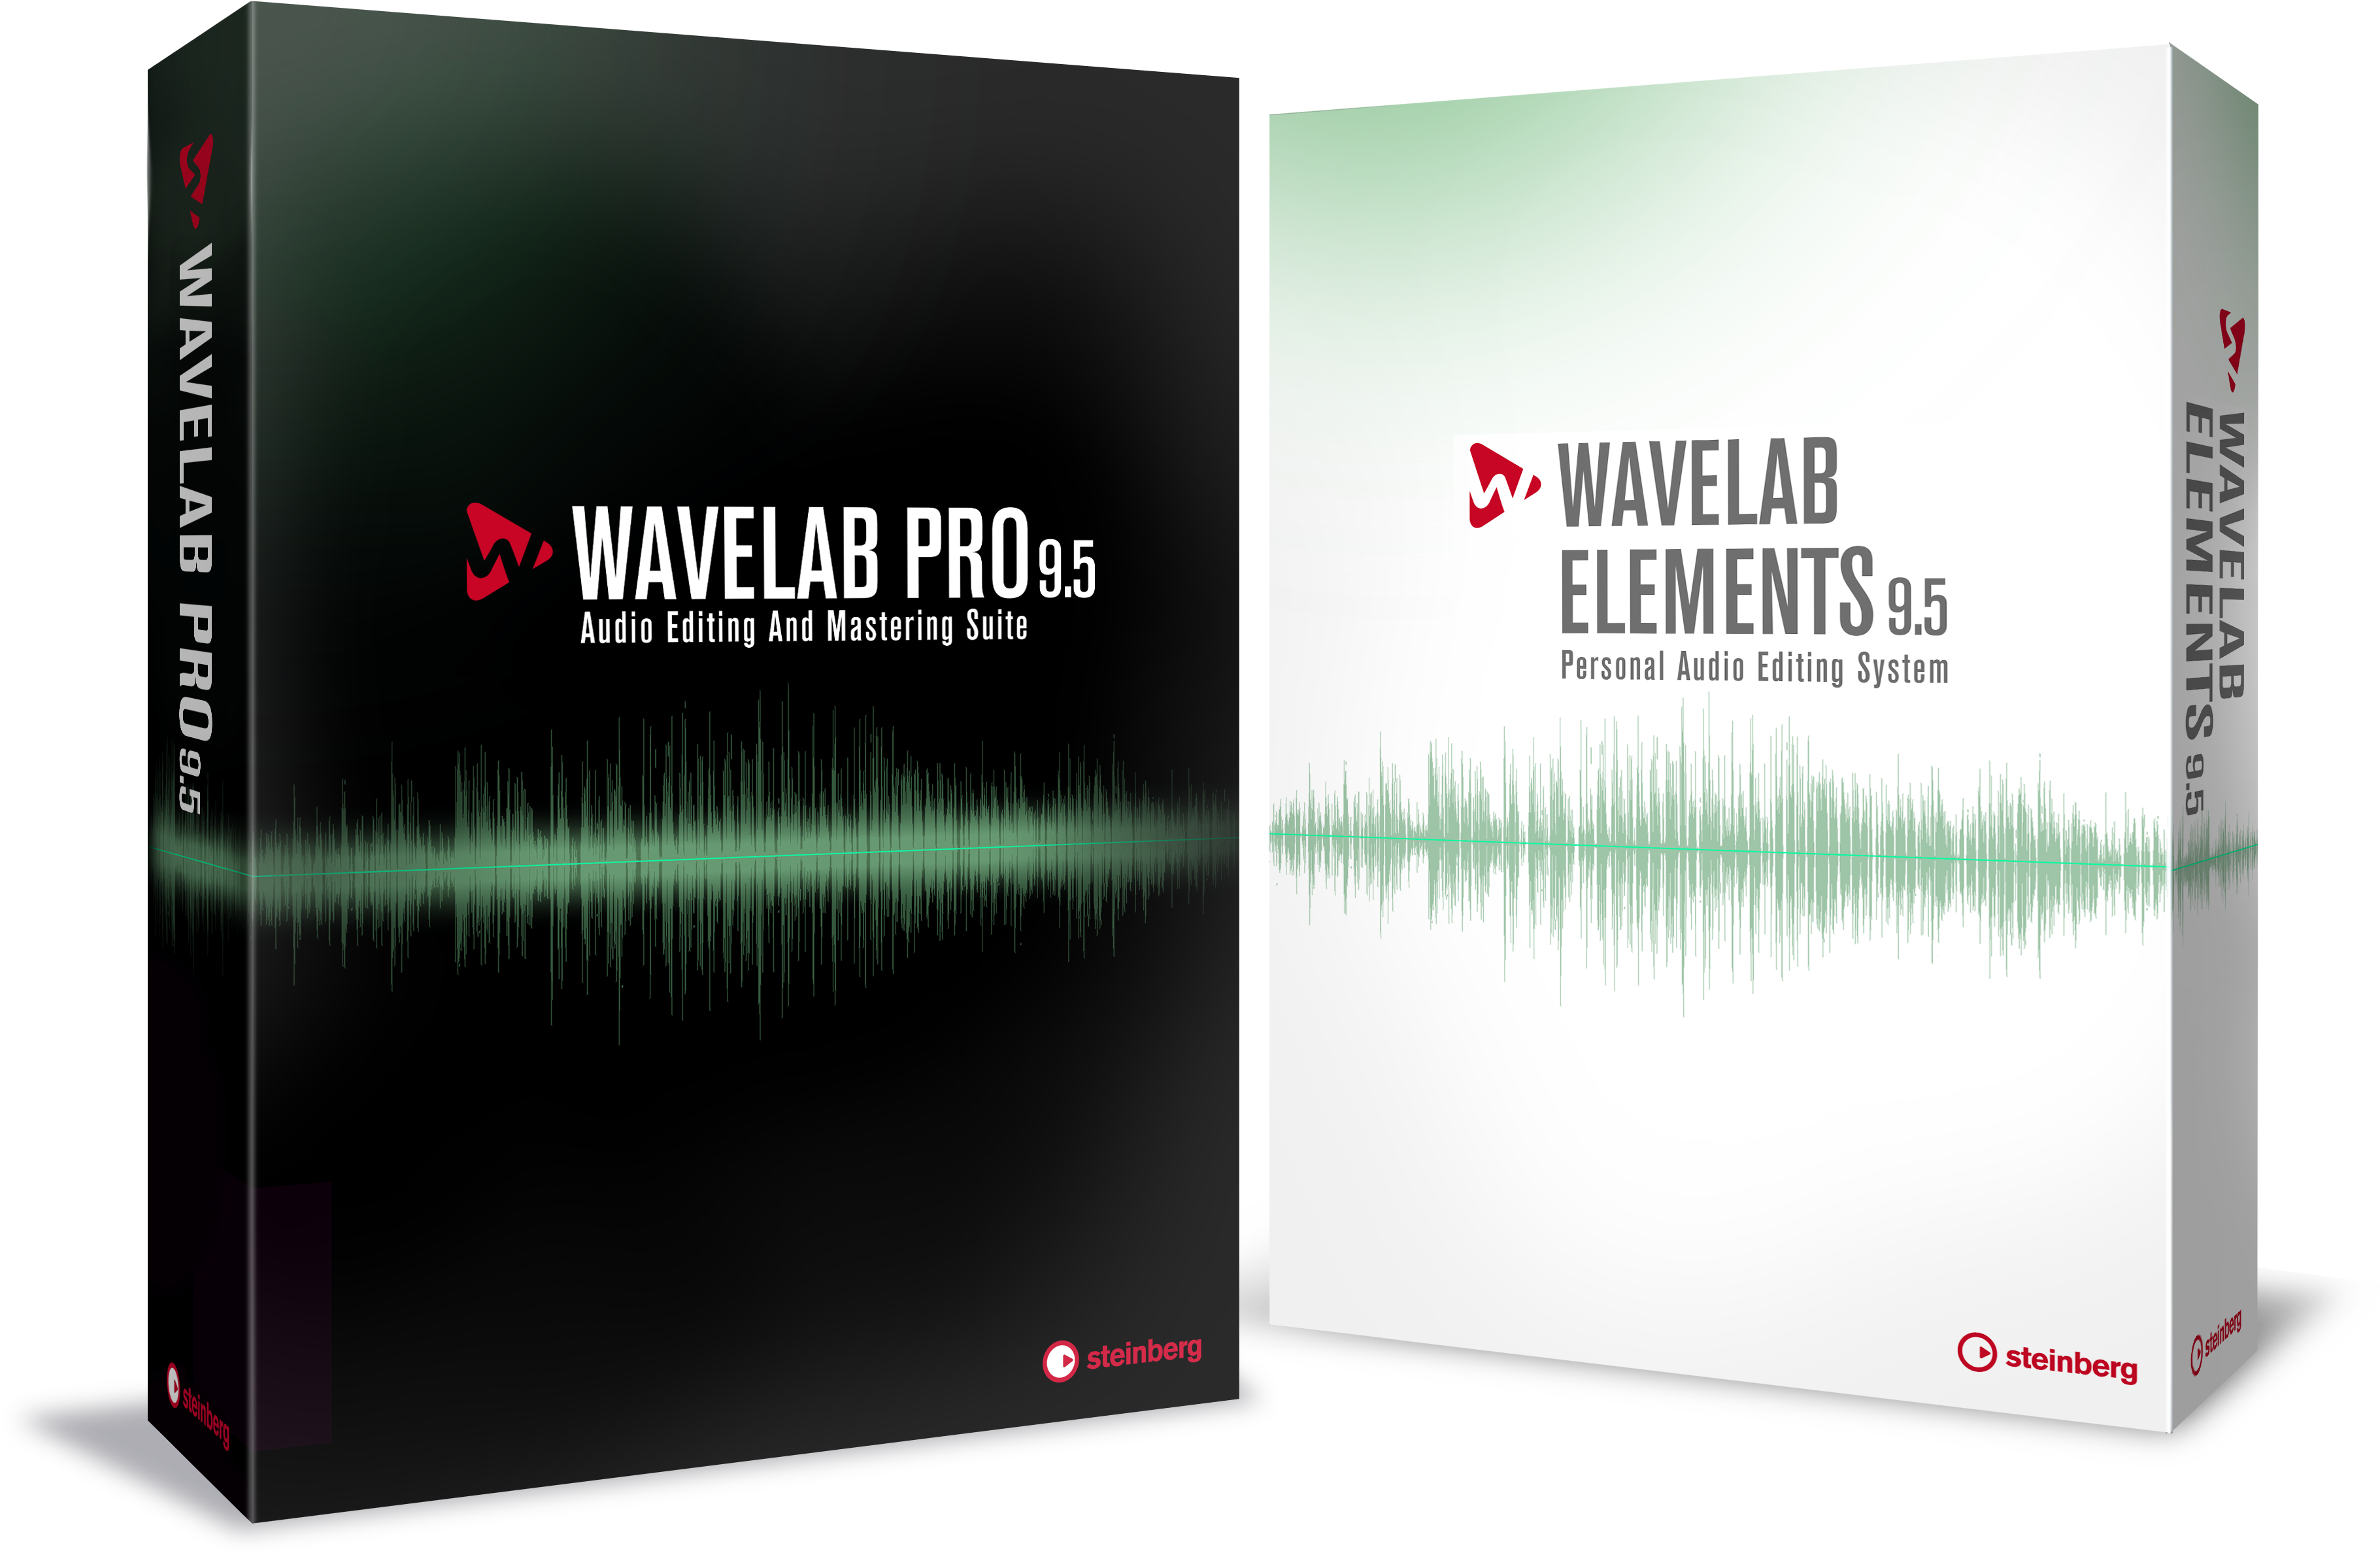 wavelab elements to pro